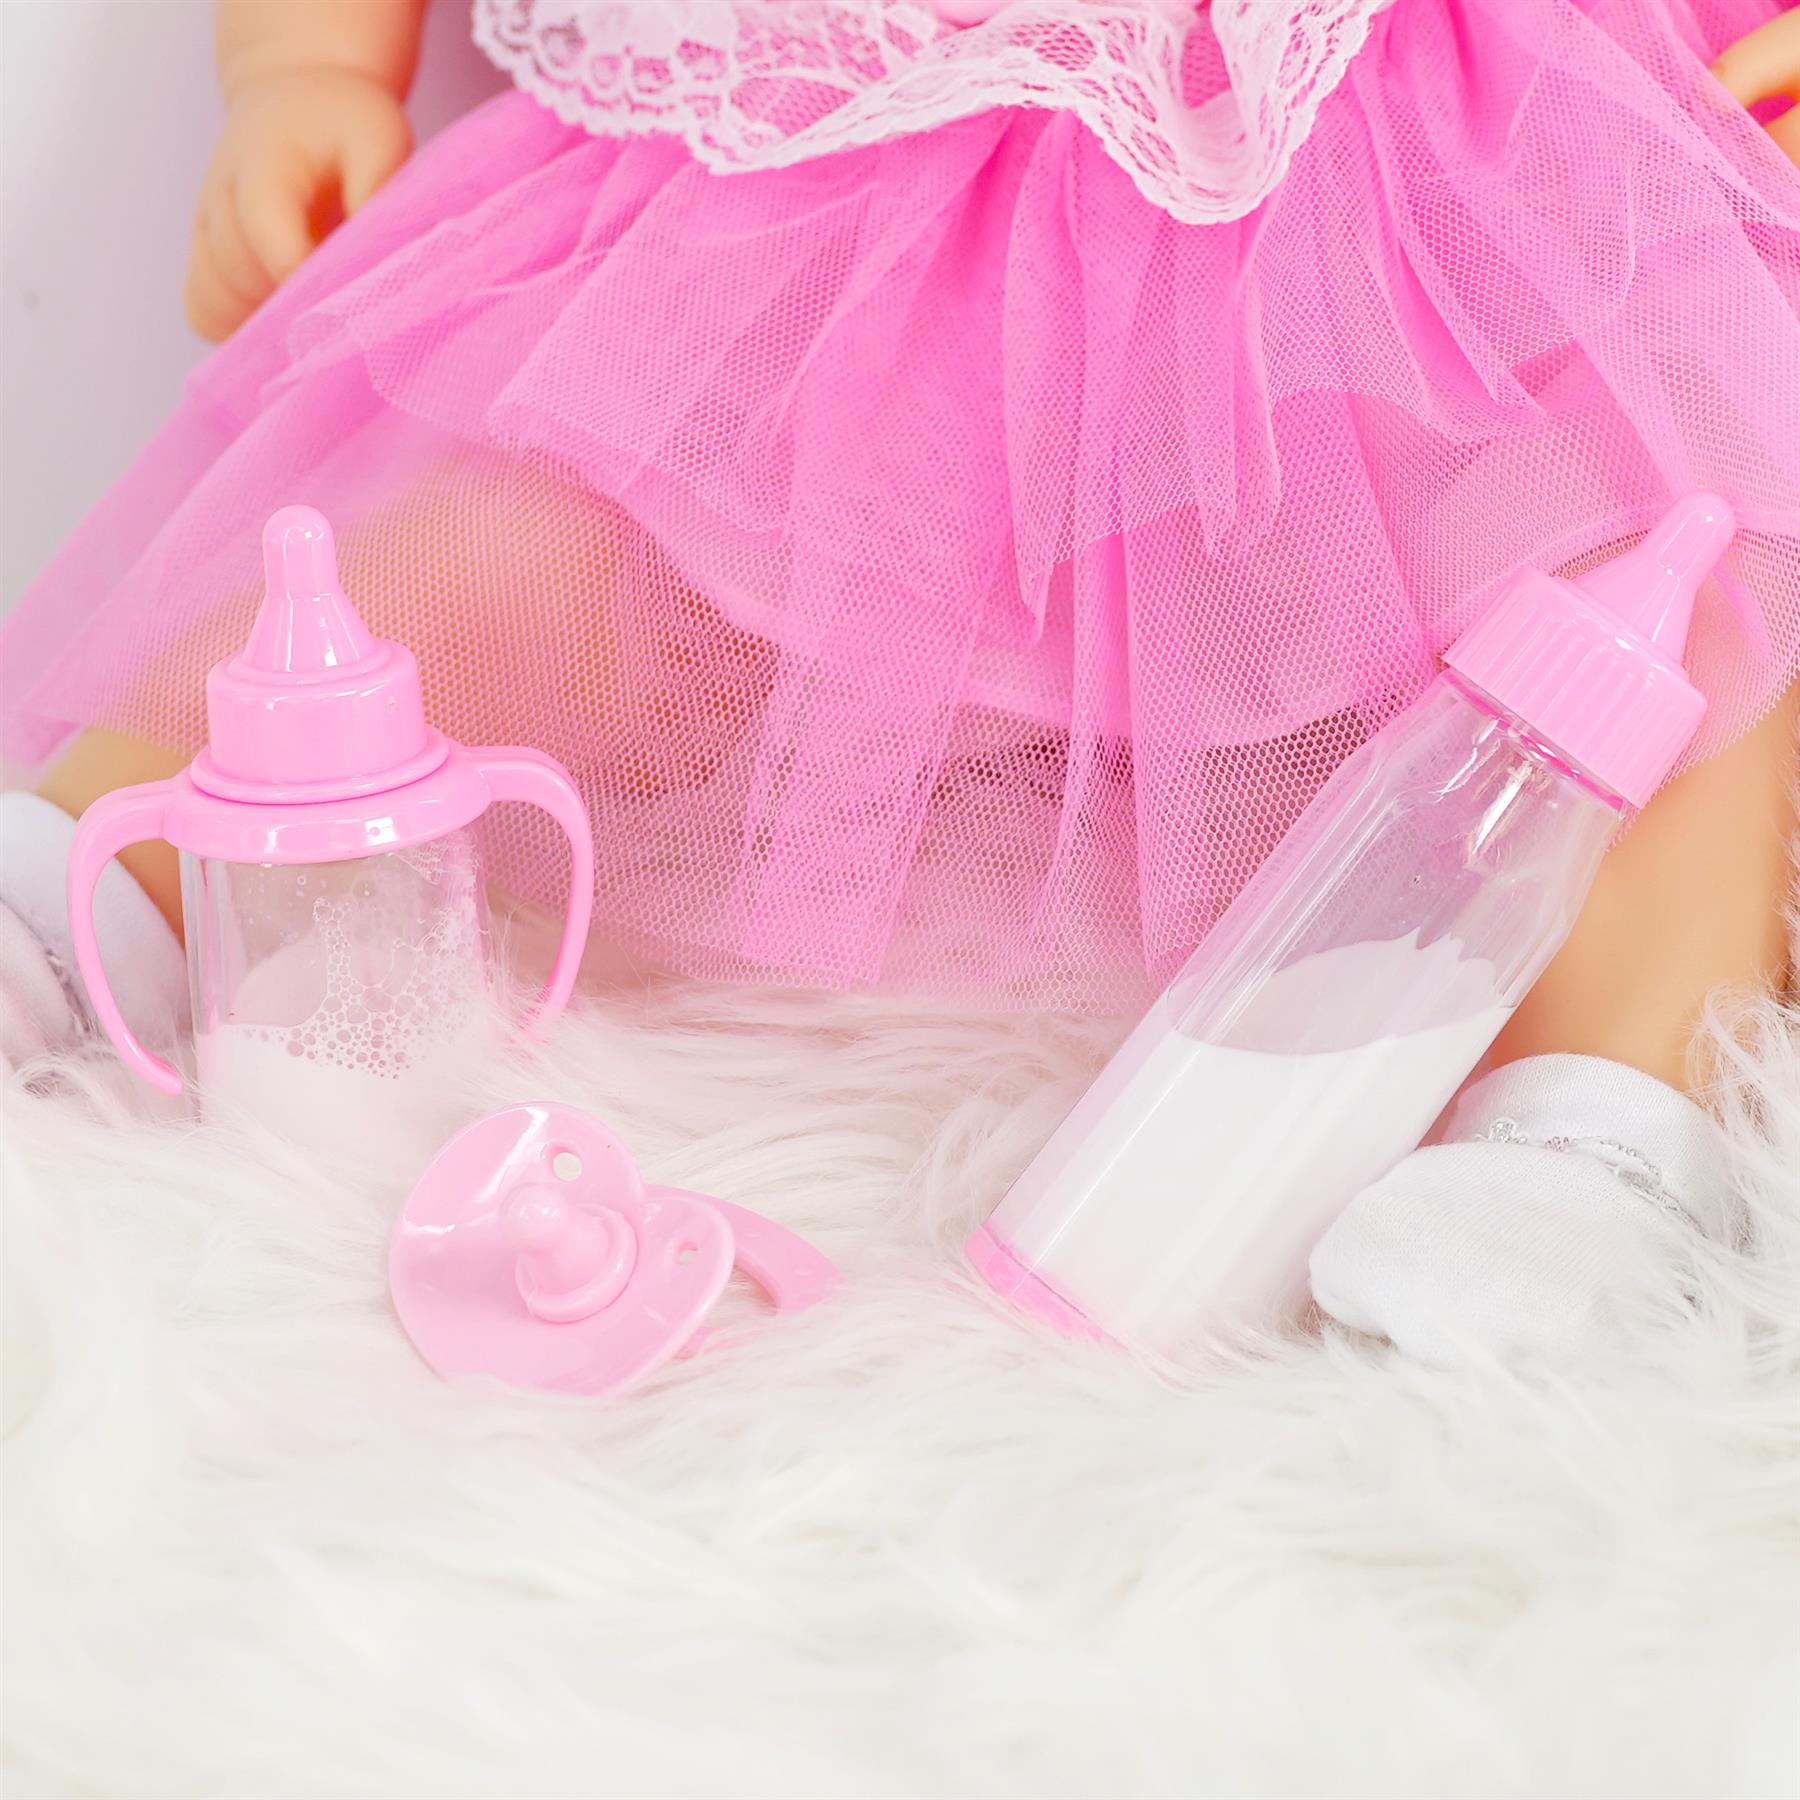 BiBi Doll Milk Bottle Set for Baby Dolls by BiBi Doll - The Magic Toy Shop